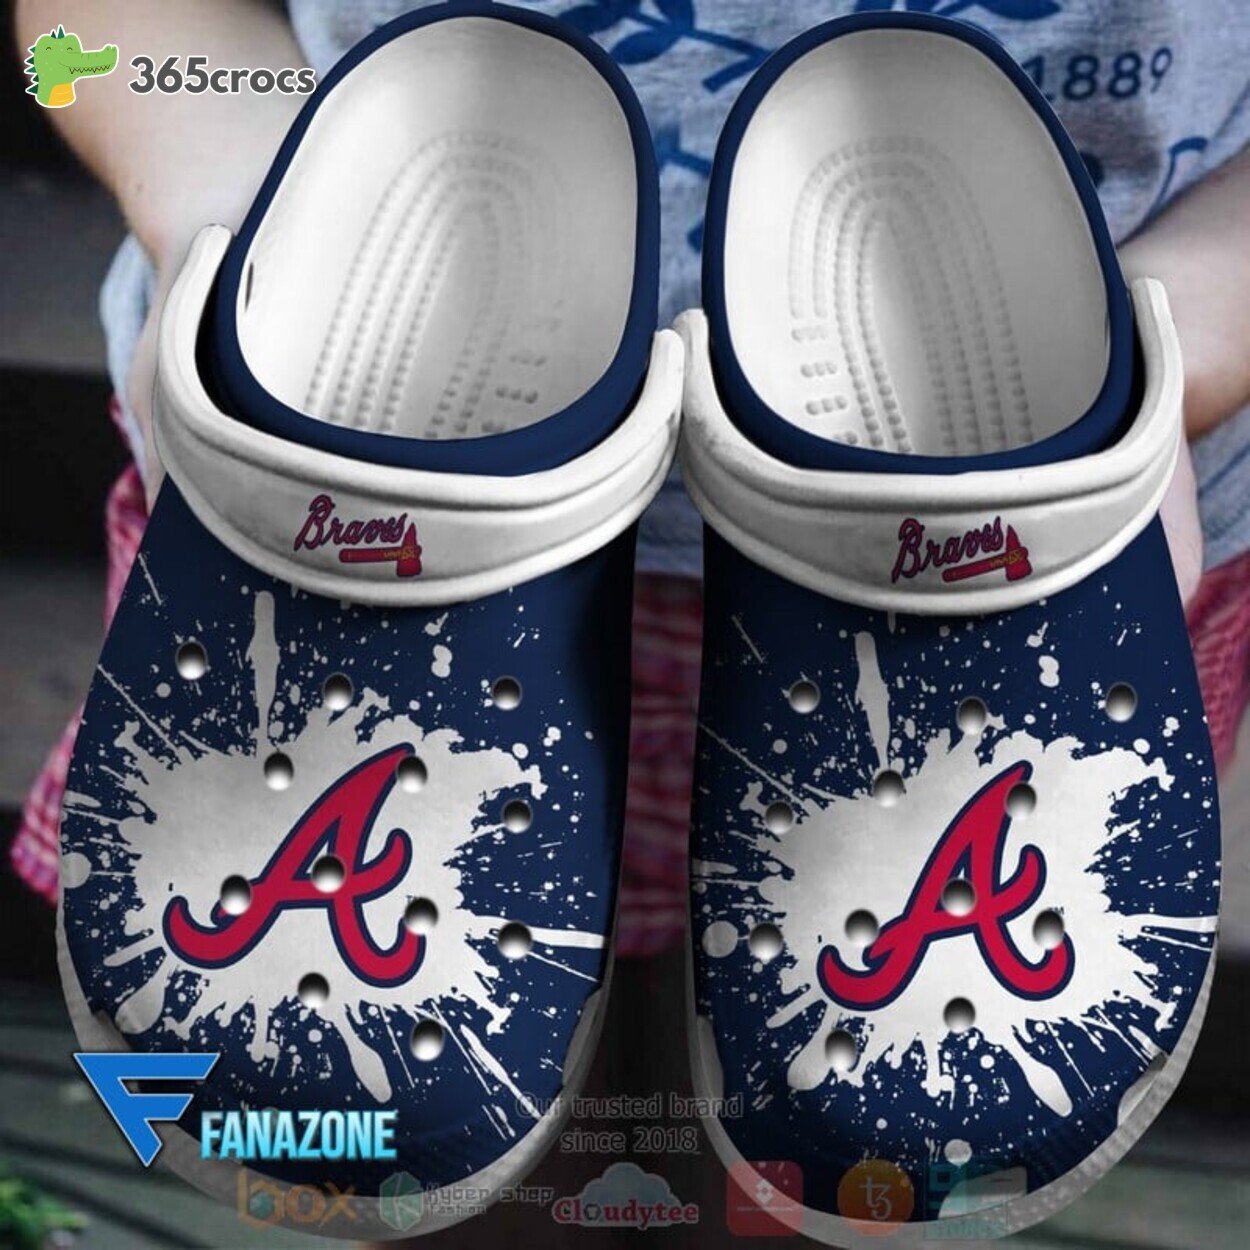 Atlanta Braves MLB Sport Crocss Clogs Shoes Comfortable